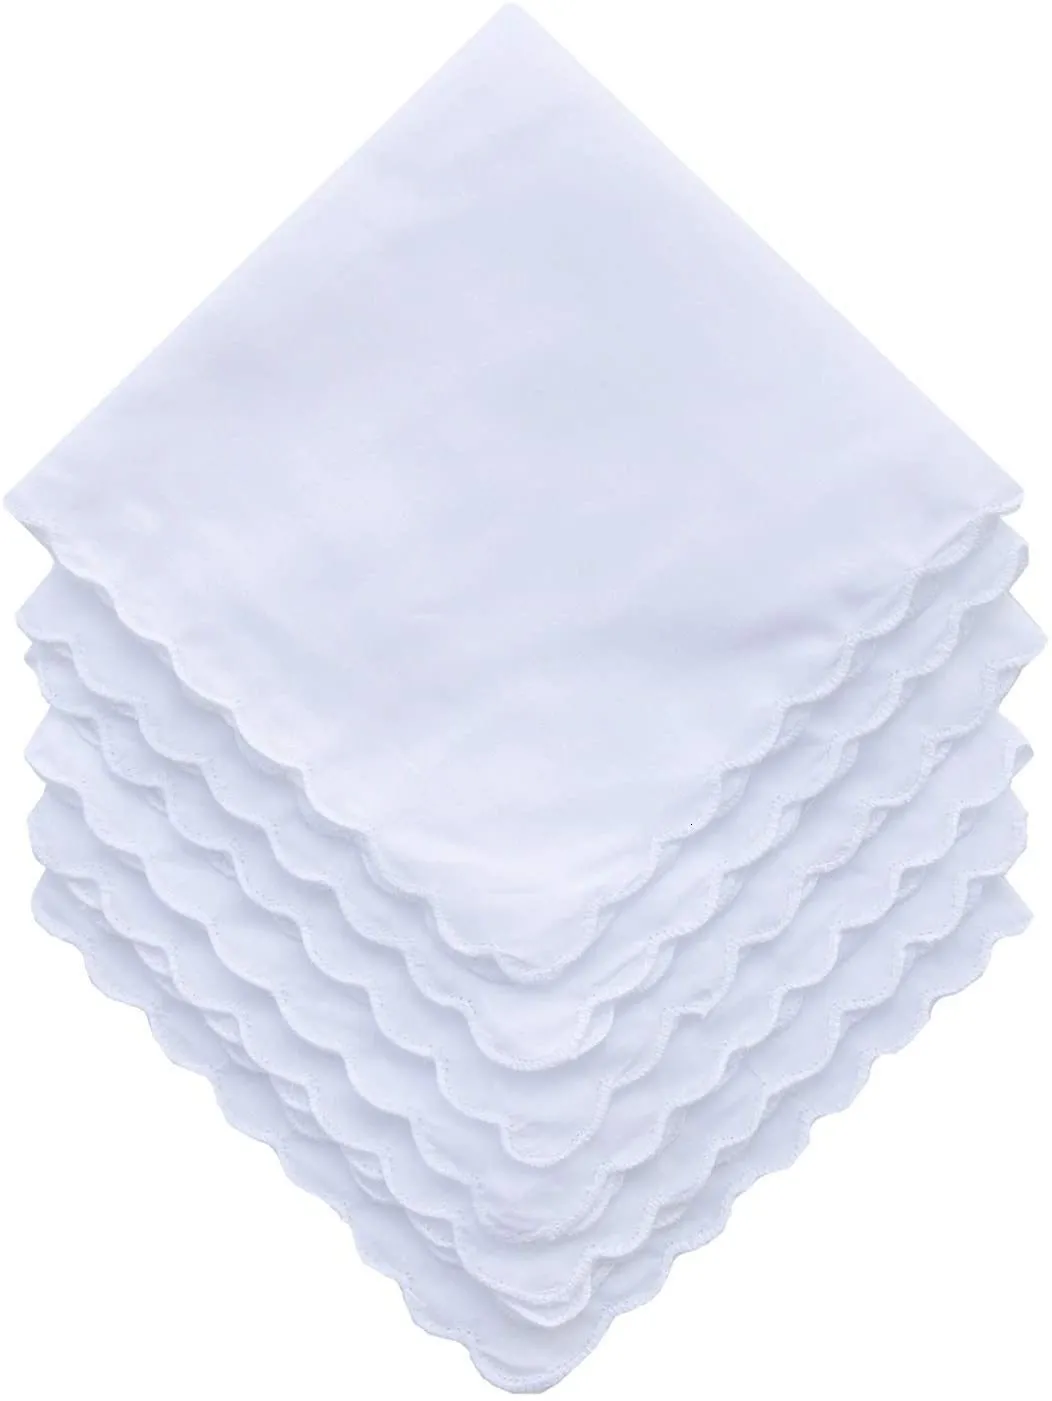 Zakdoeken 12 stks bulk pack katoen geschulpte hankies pocket vierkant handdoek wit 230110